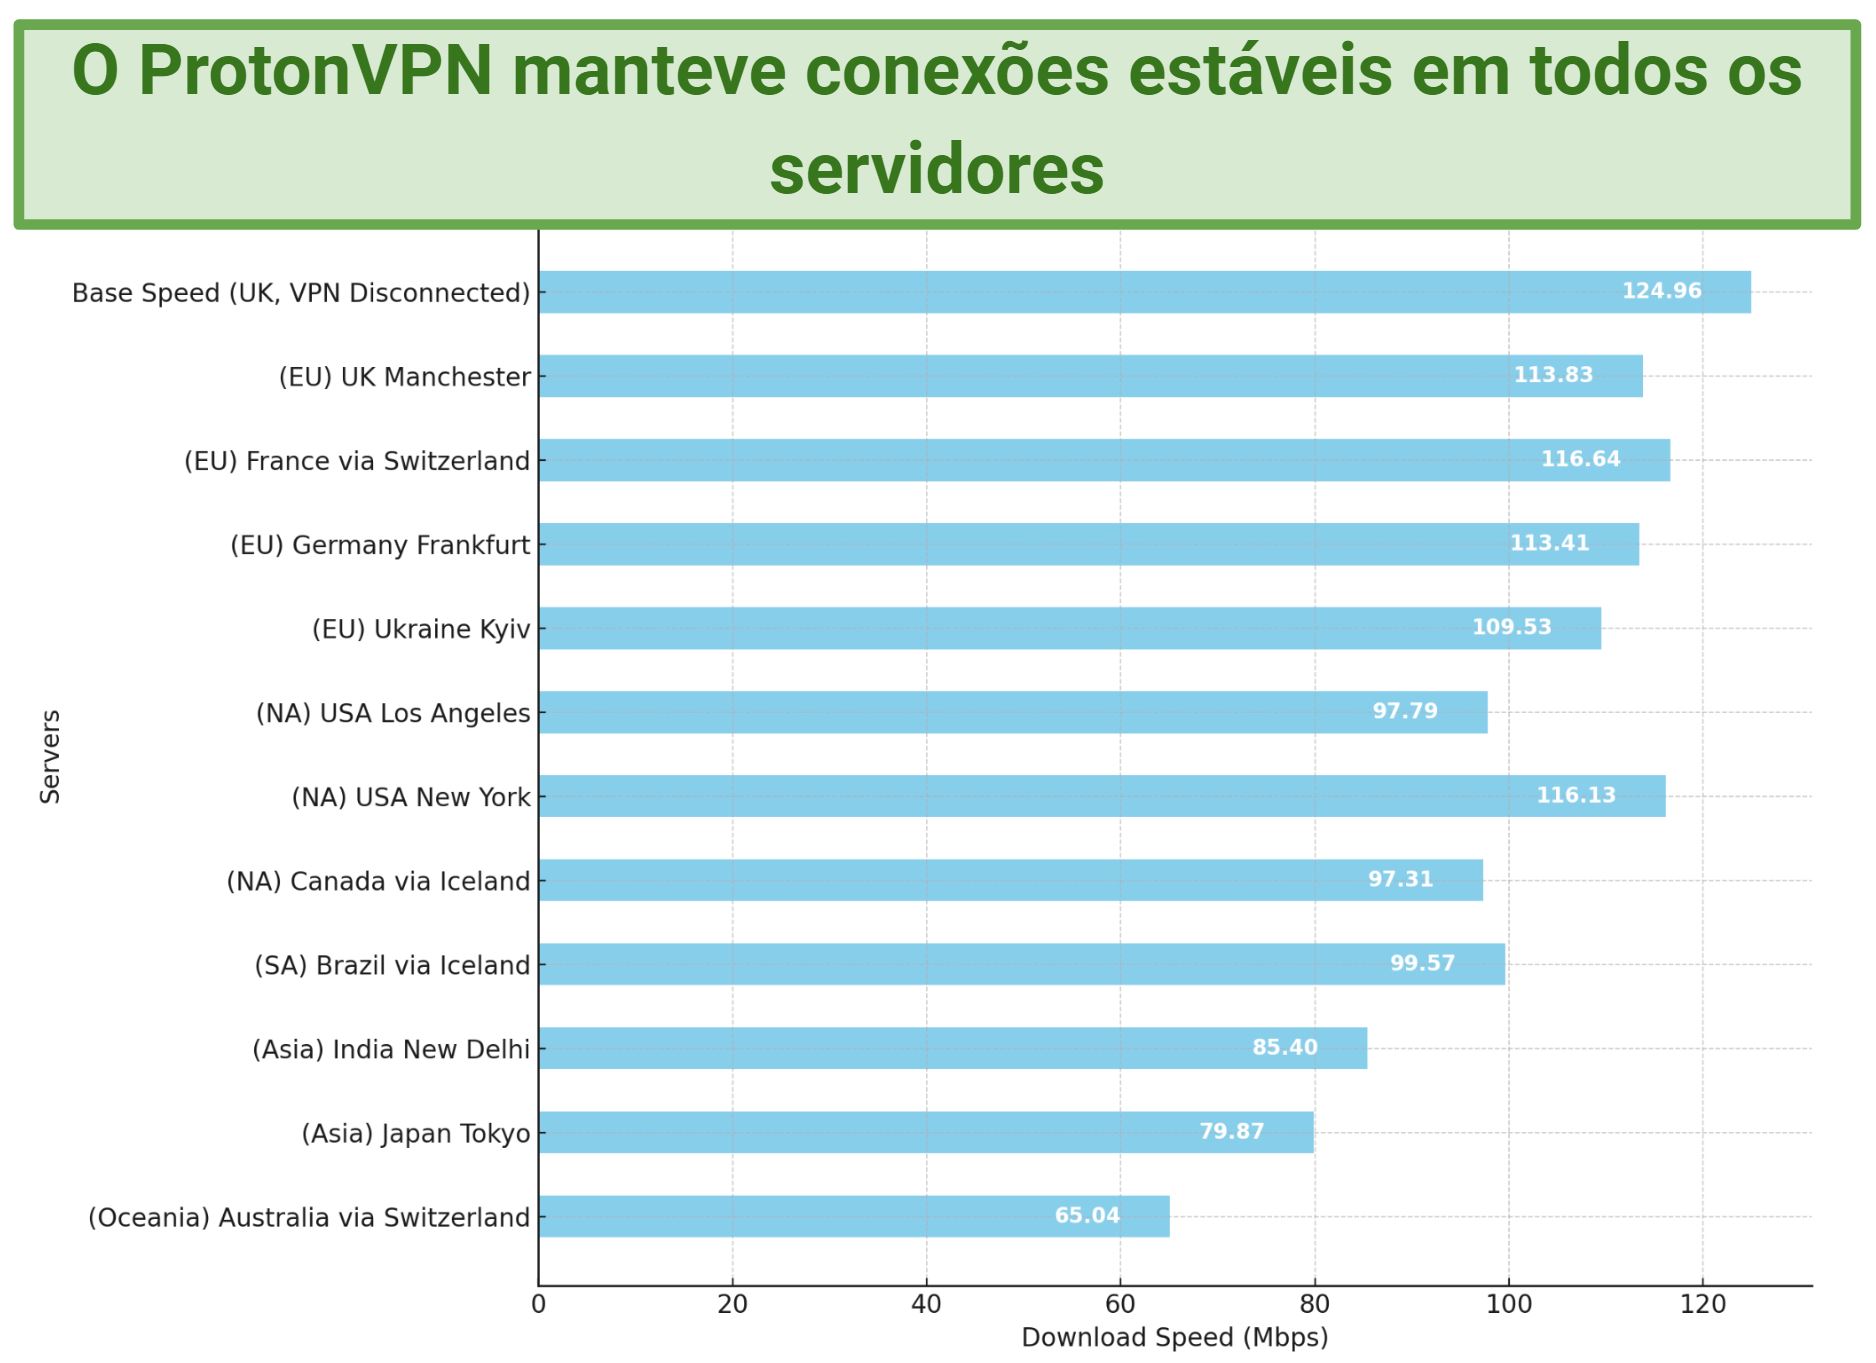 Screenshot of ProtonVPN speed test results